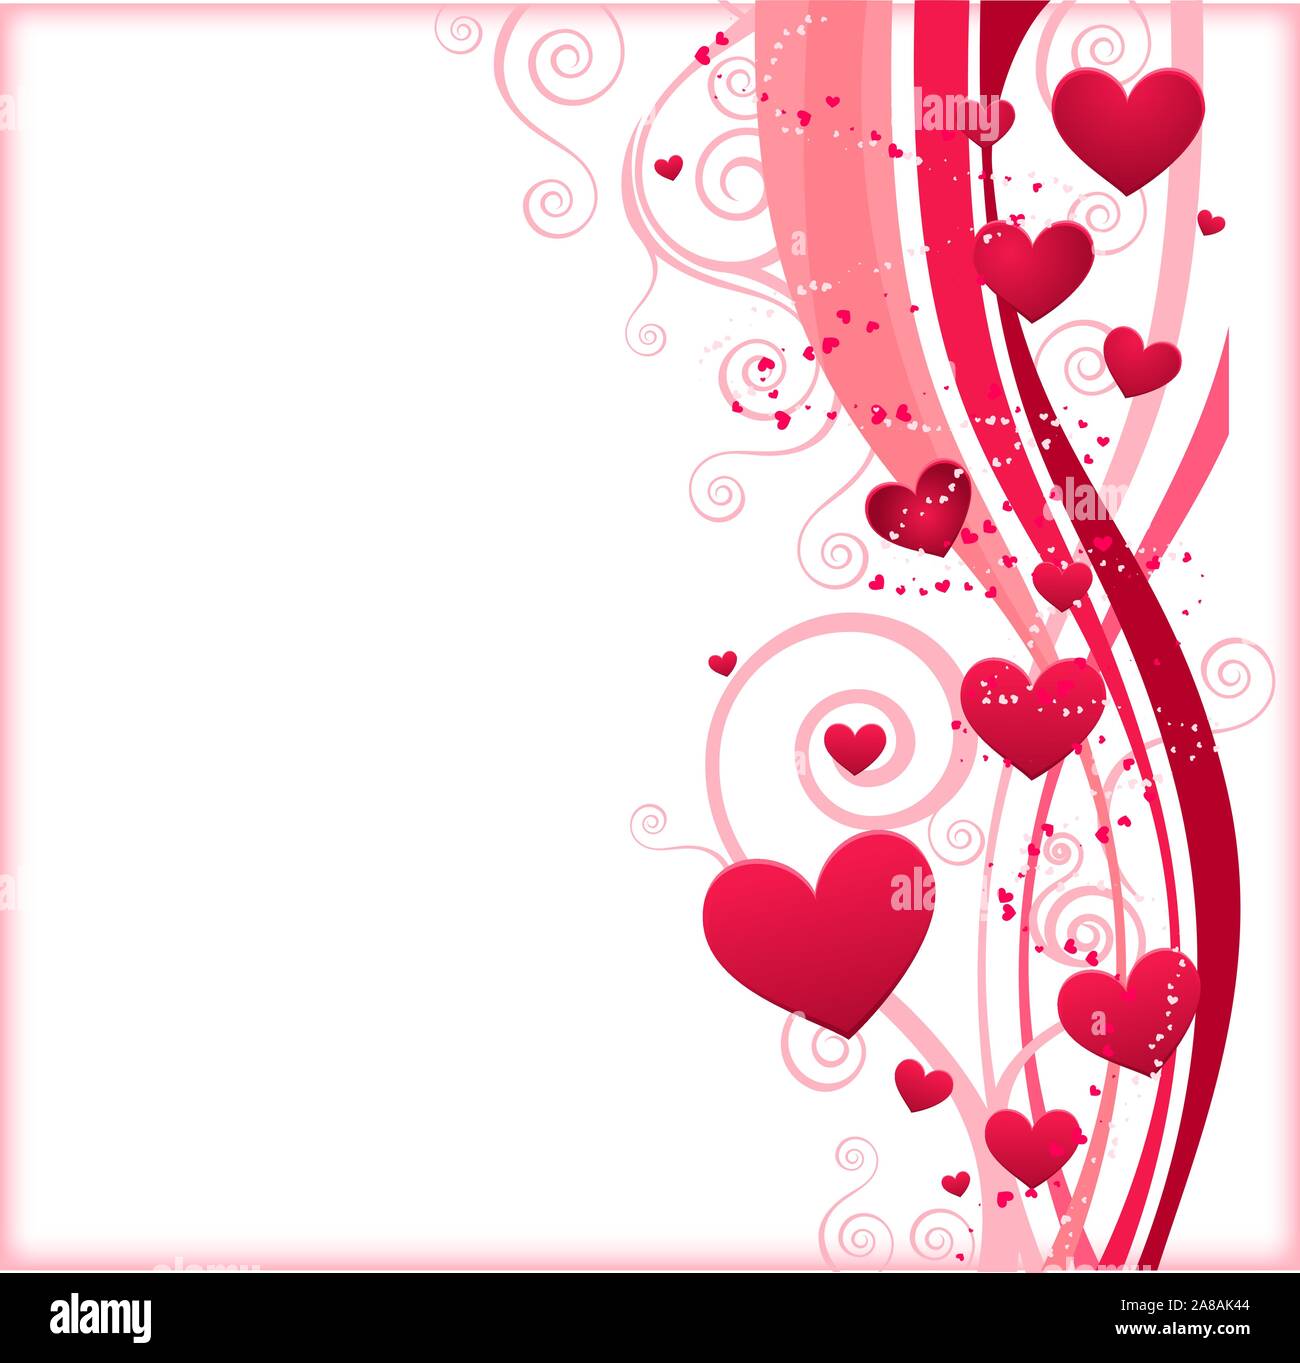 Heart lines design pattern vector illustration Stock Vector Image & Art ...